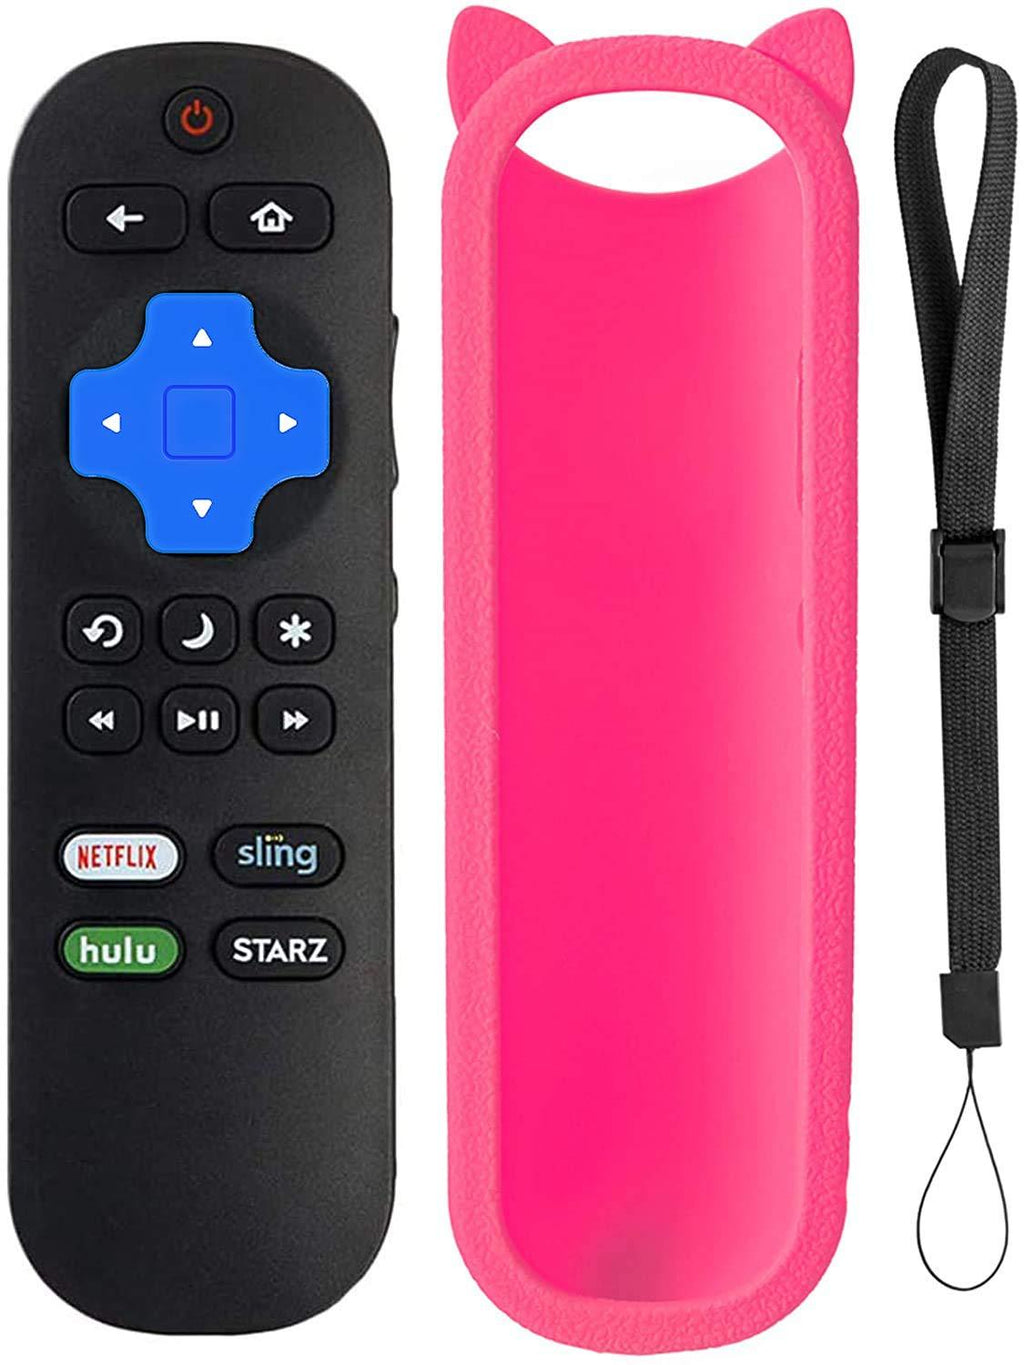 Repalcement LC-RCRUS-18 Remote Control Compatible with Sharp Roku TV LC-32LB591U LC-65LBU591U LC-43LBU591U (with Pink Rmote Case Protective Cover)